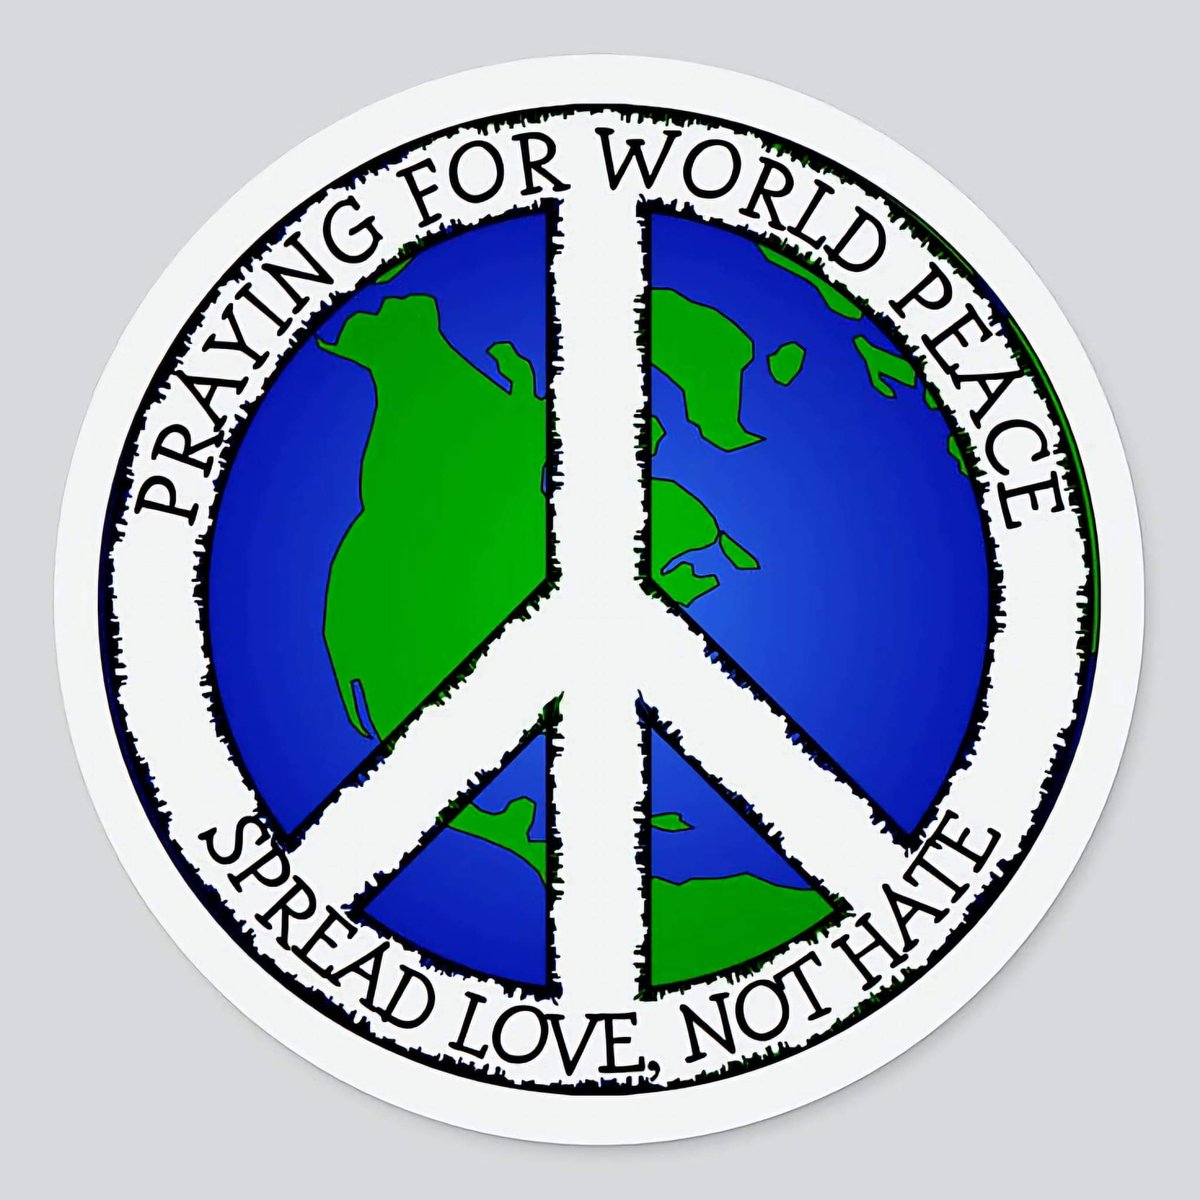 #GivePeaceAChance #PeaceTrain 
#AChangeIsGonnaCome #PeaceandLove